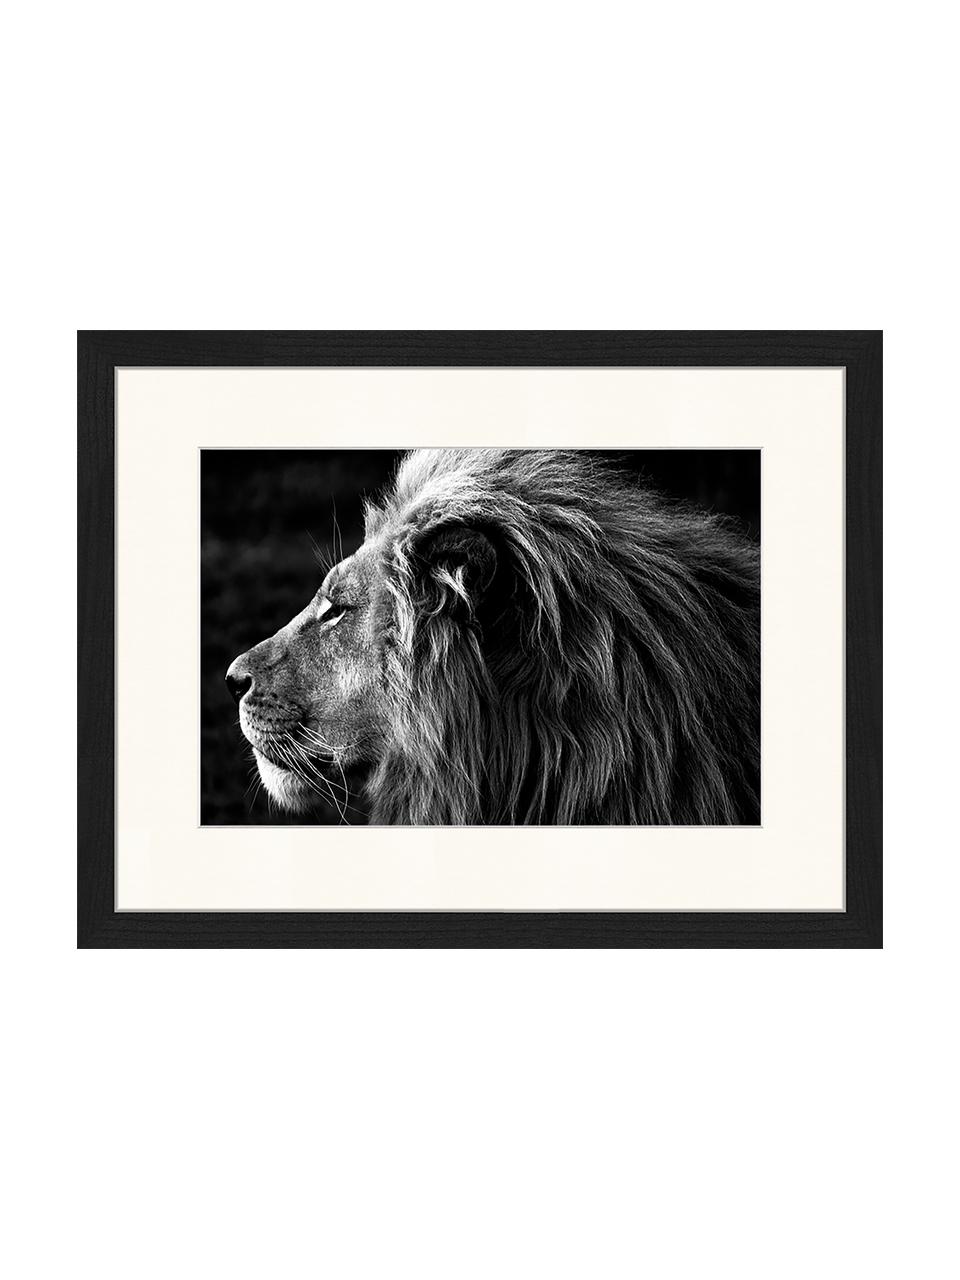 Gerahmter Digitaldruck Close-Up Of A Lion, Bild: Digitaldruck auf Papier, , Rahmen: Holz, lackiert, Front: Plexiglas, Lion, B 43 x H 33 cm